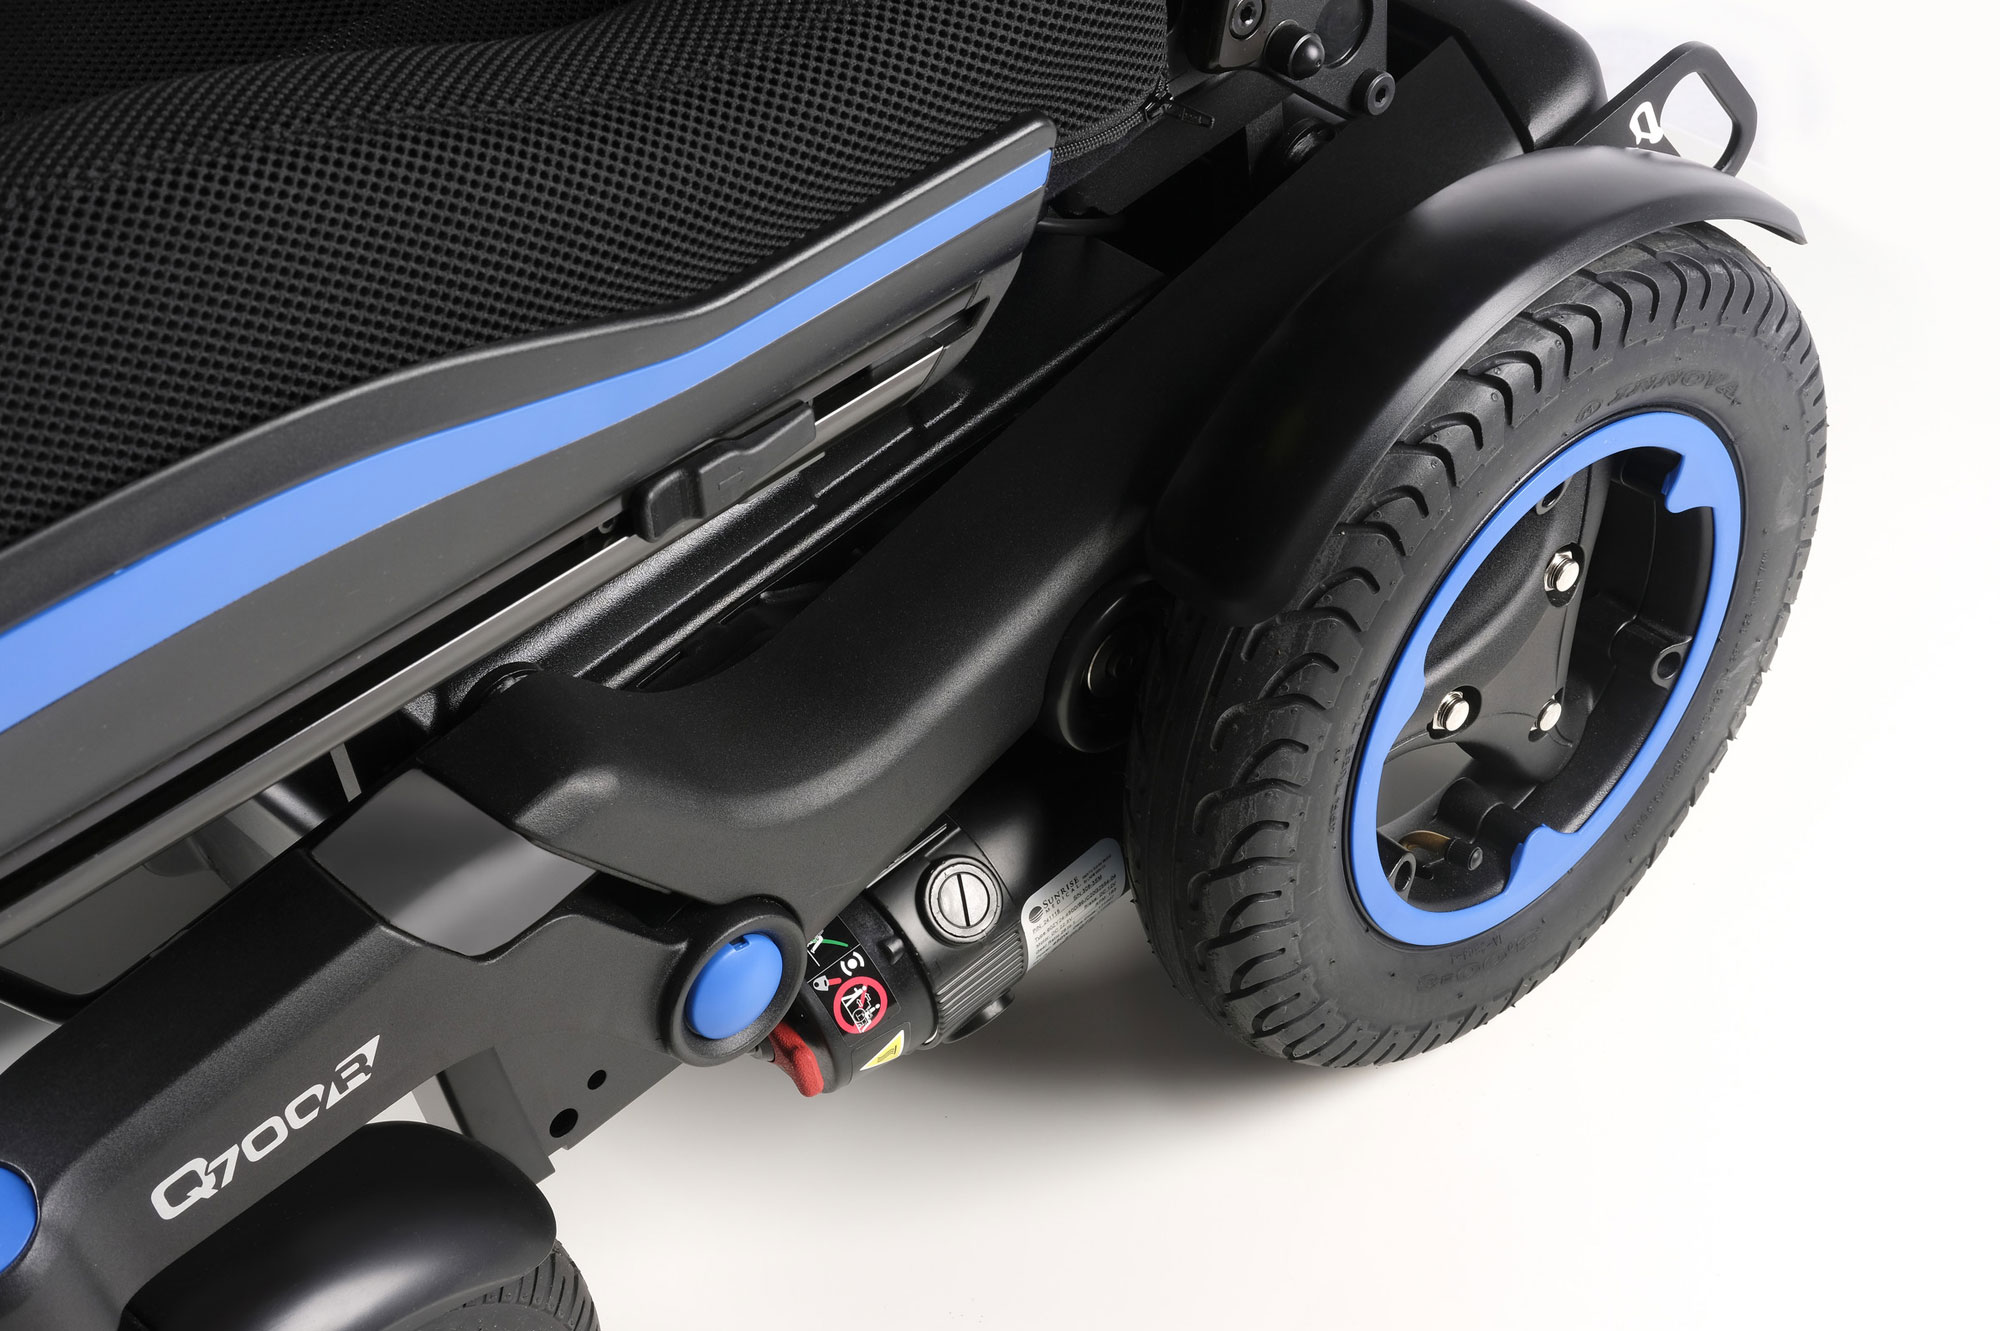 Quickie Q700 R SEDEO ERGO Rear-Wheel Powered Wheelchair